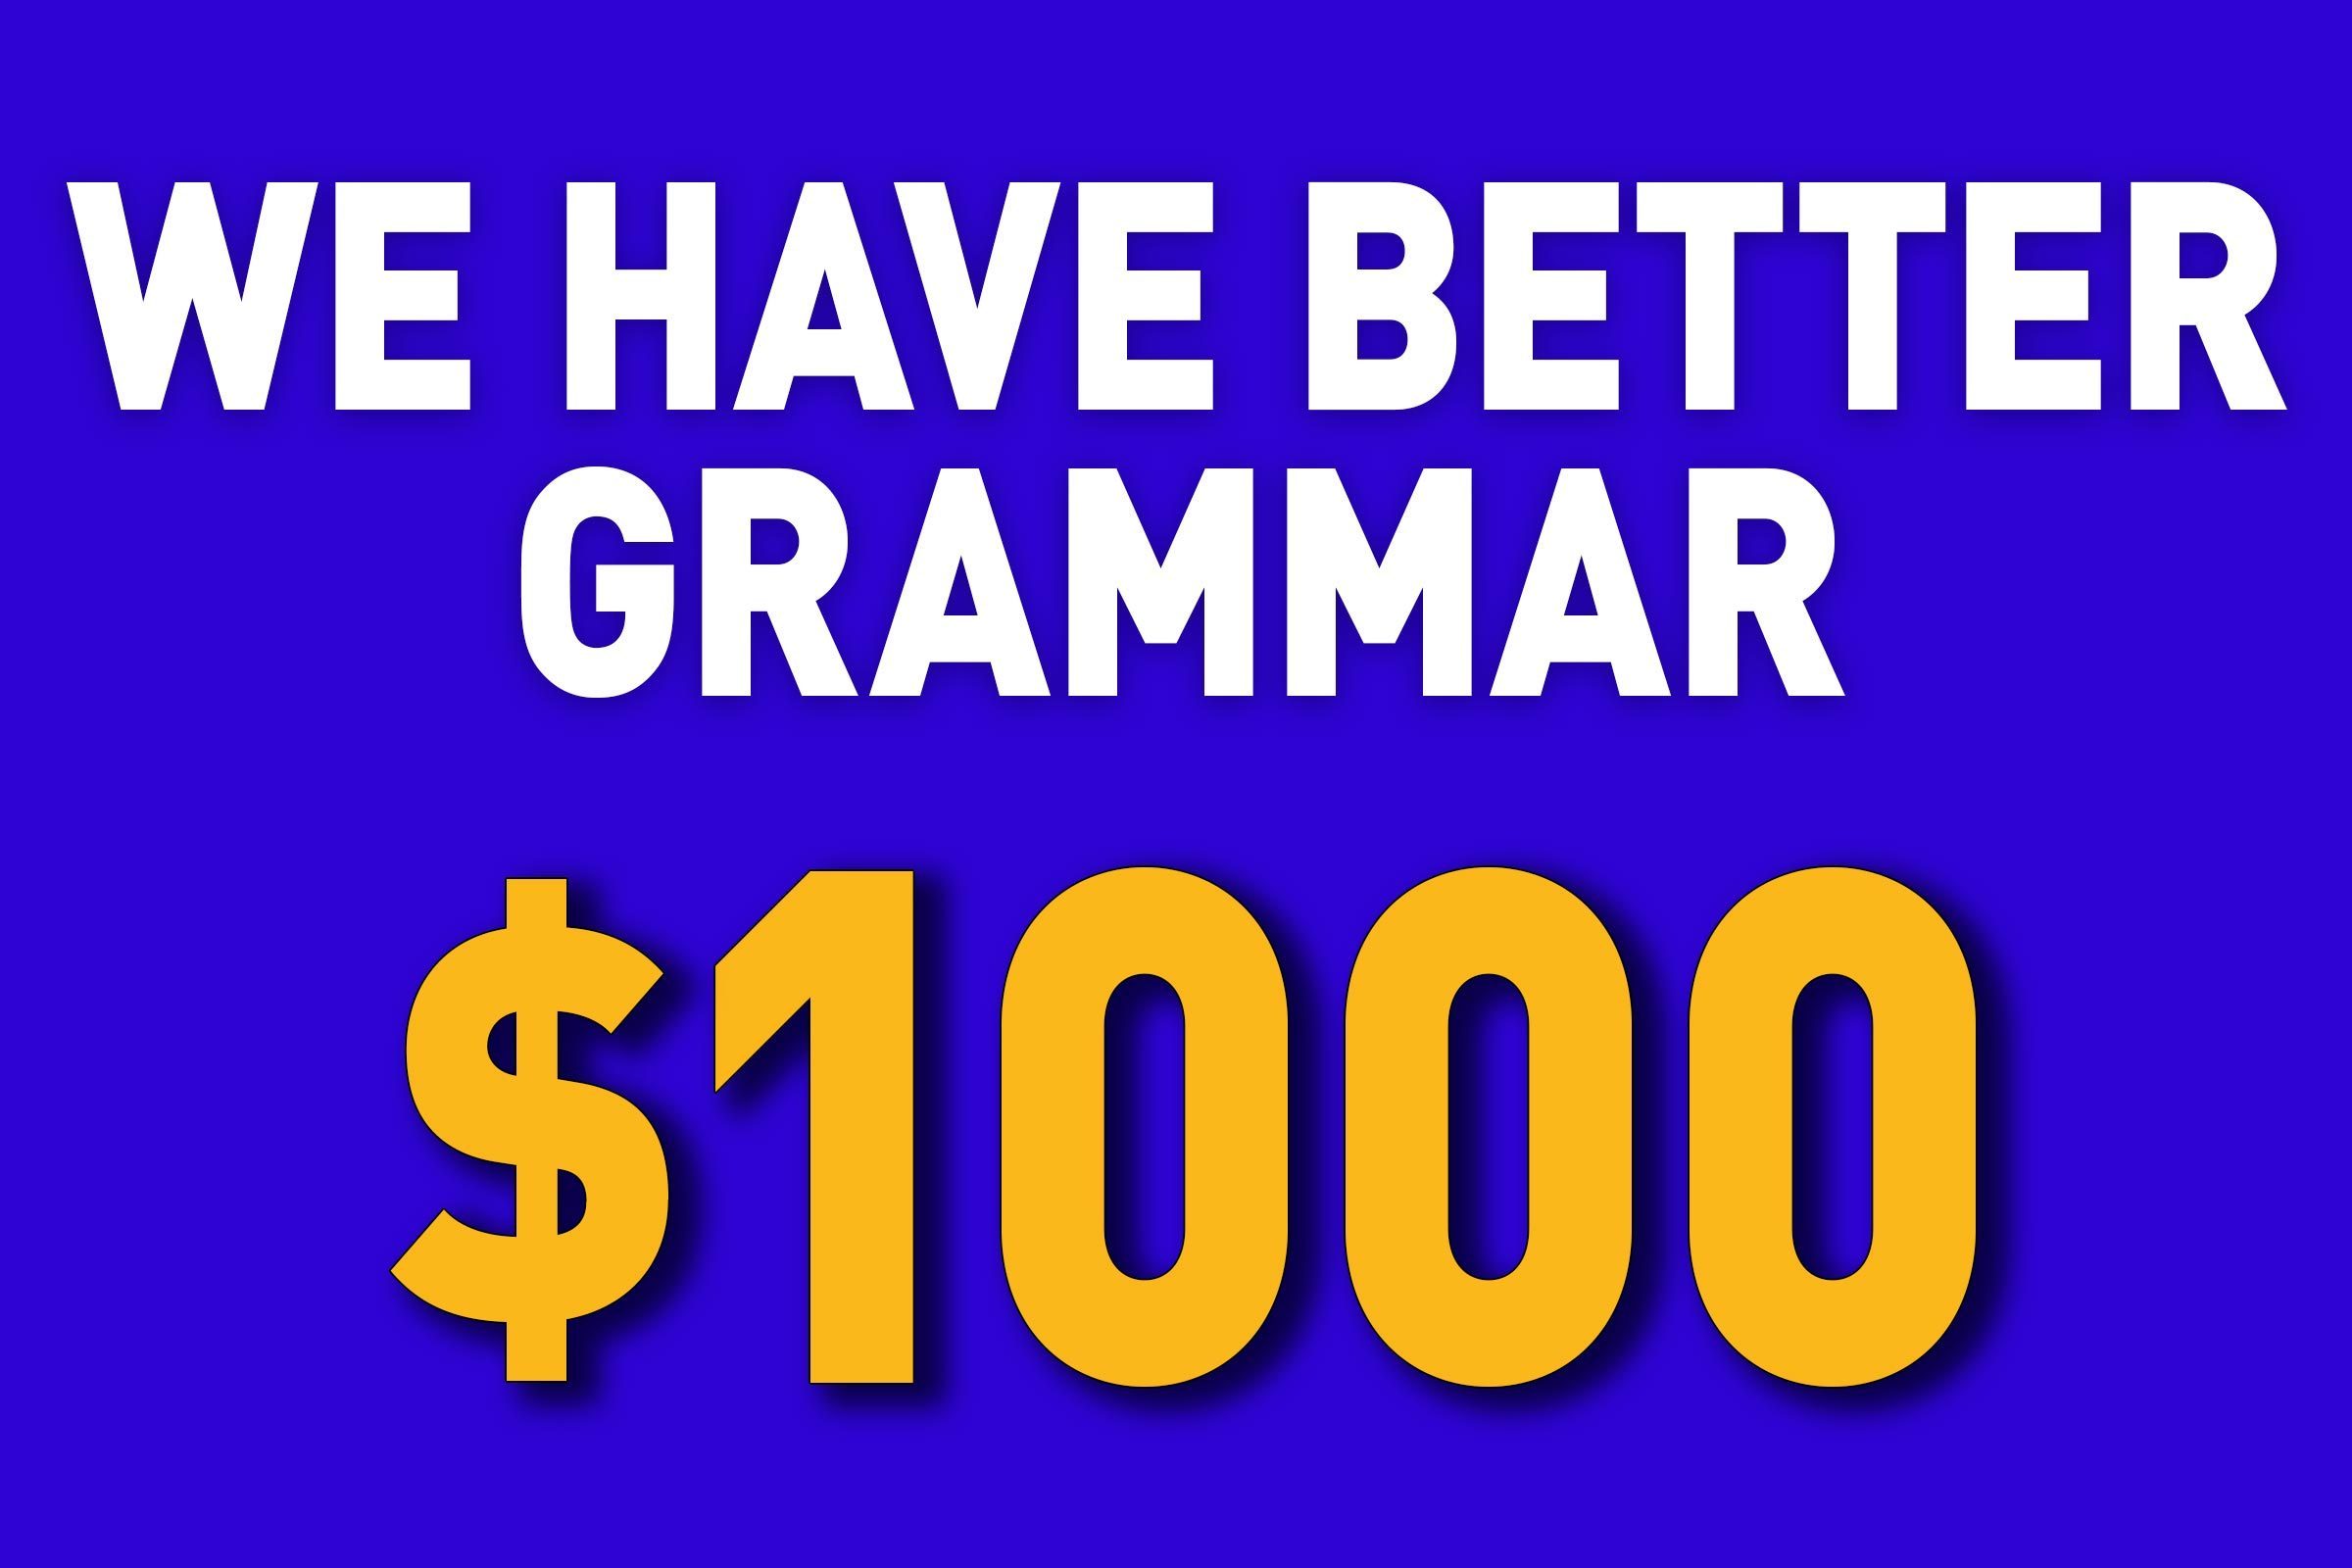 We have better grammar for $1000